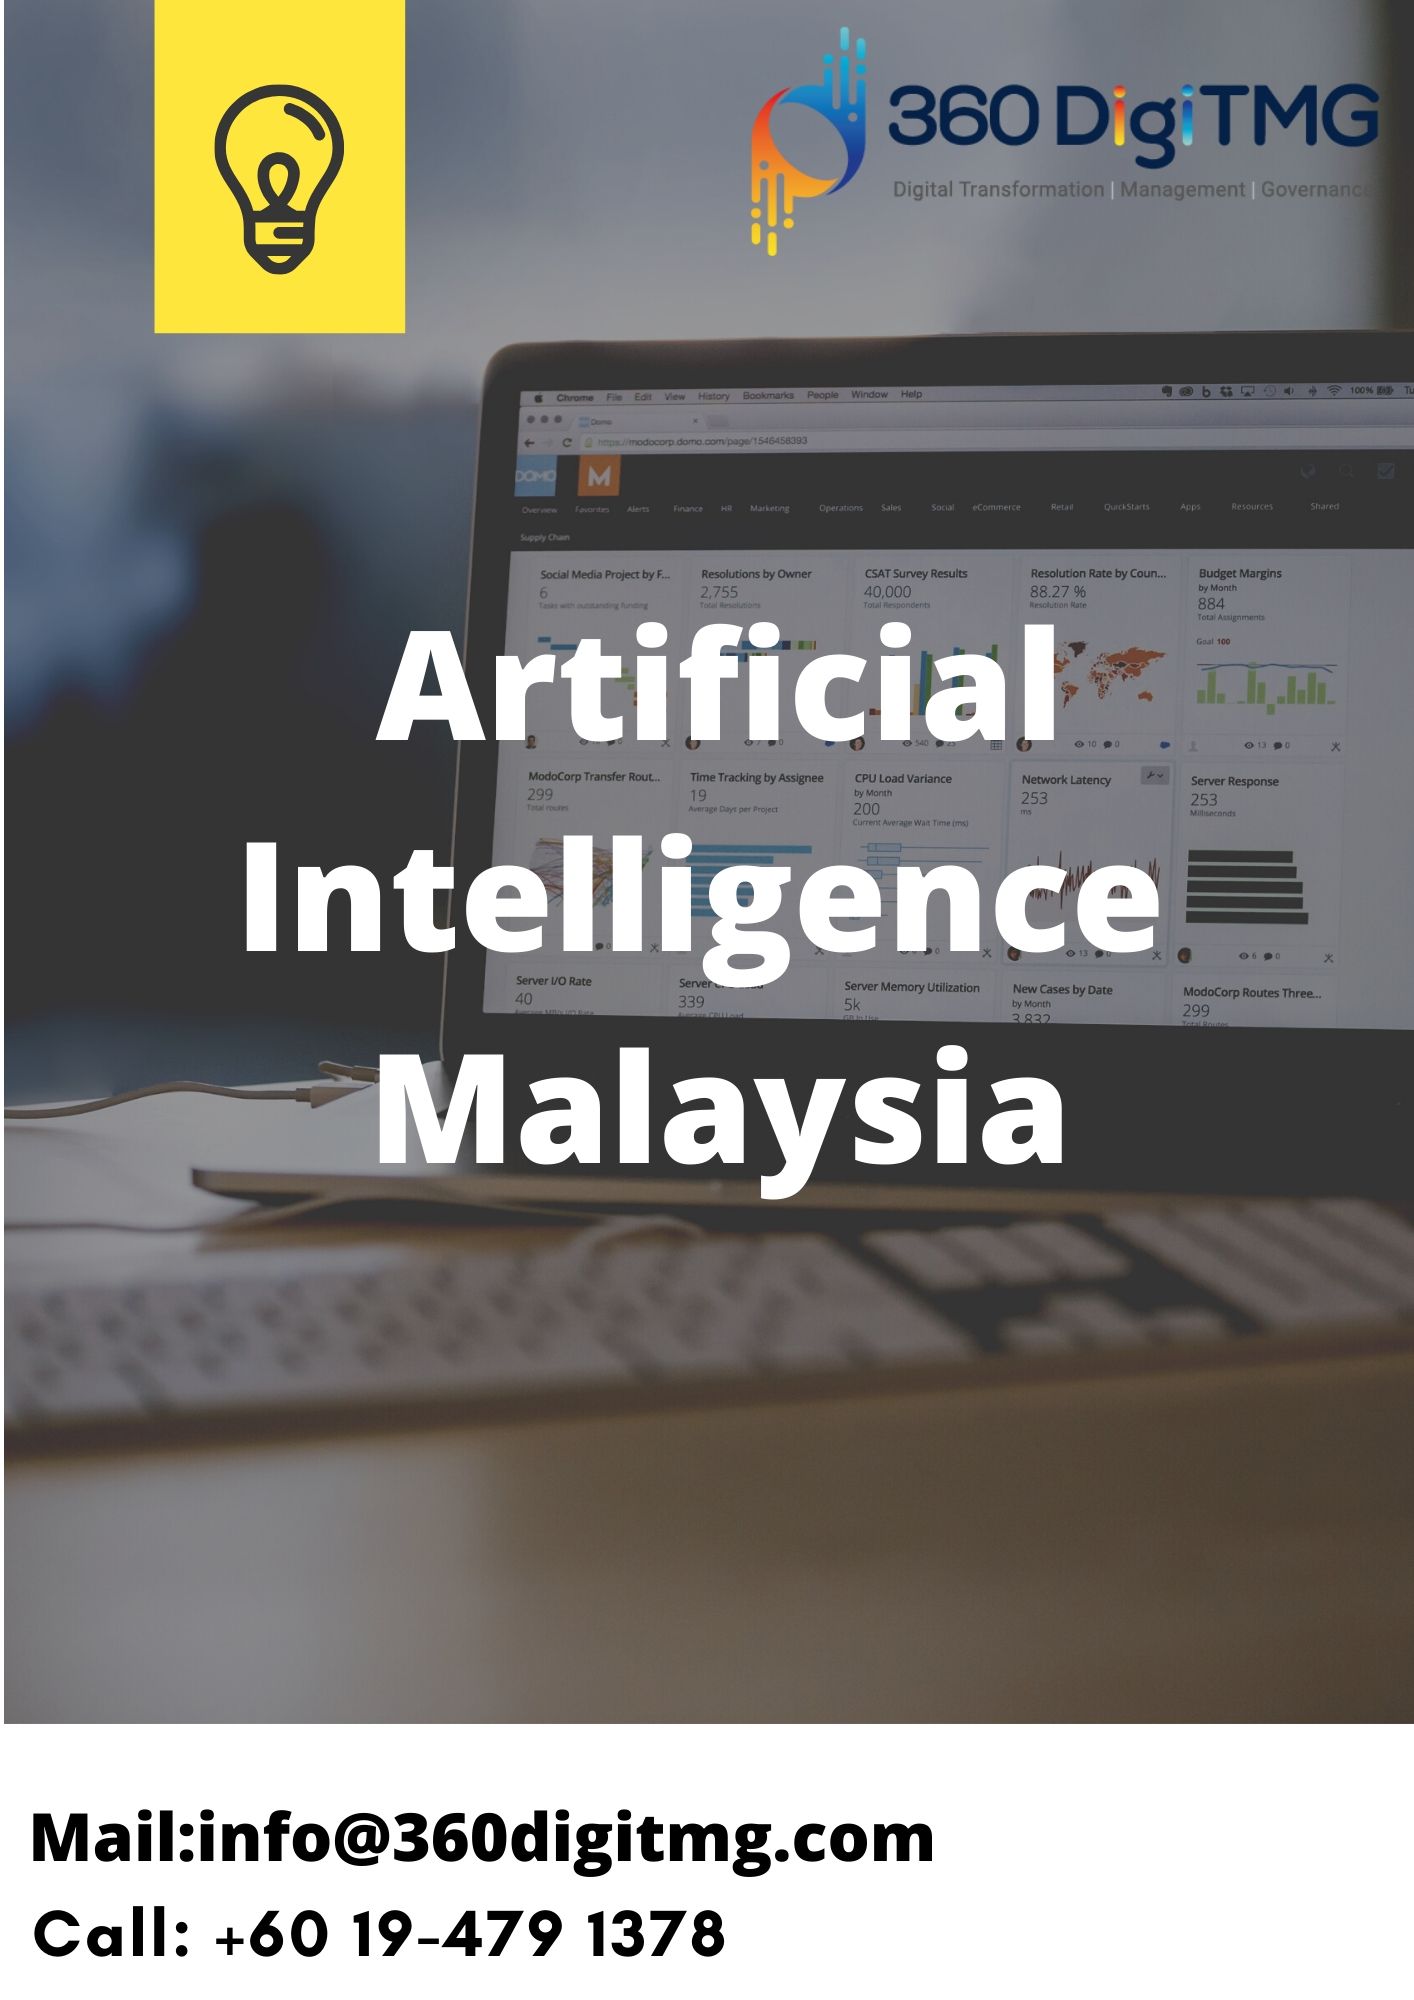 Artificial Intelligence Course Malaysia.jpg  by tejaswiniteju